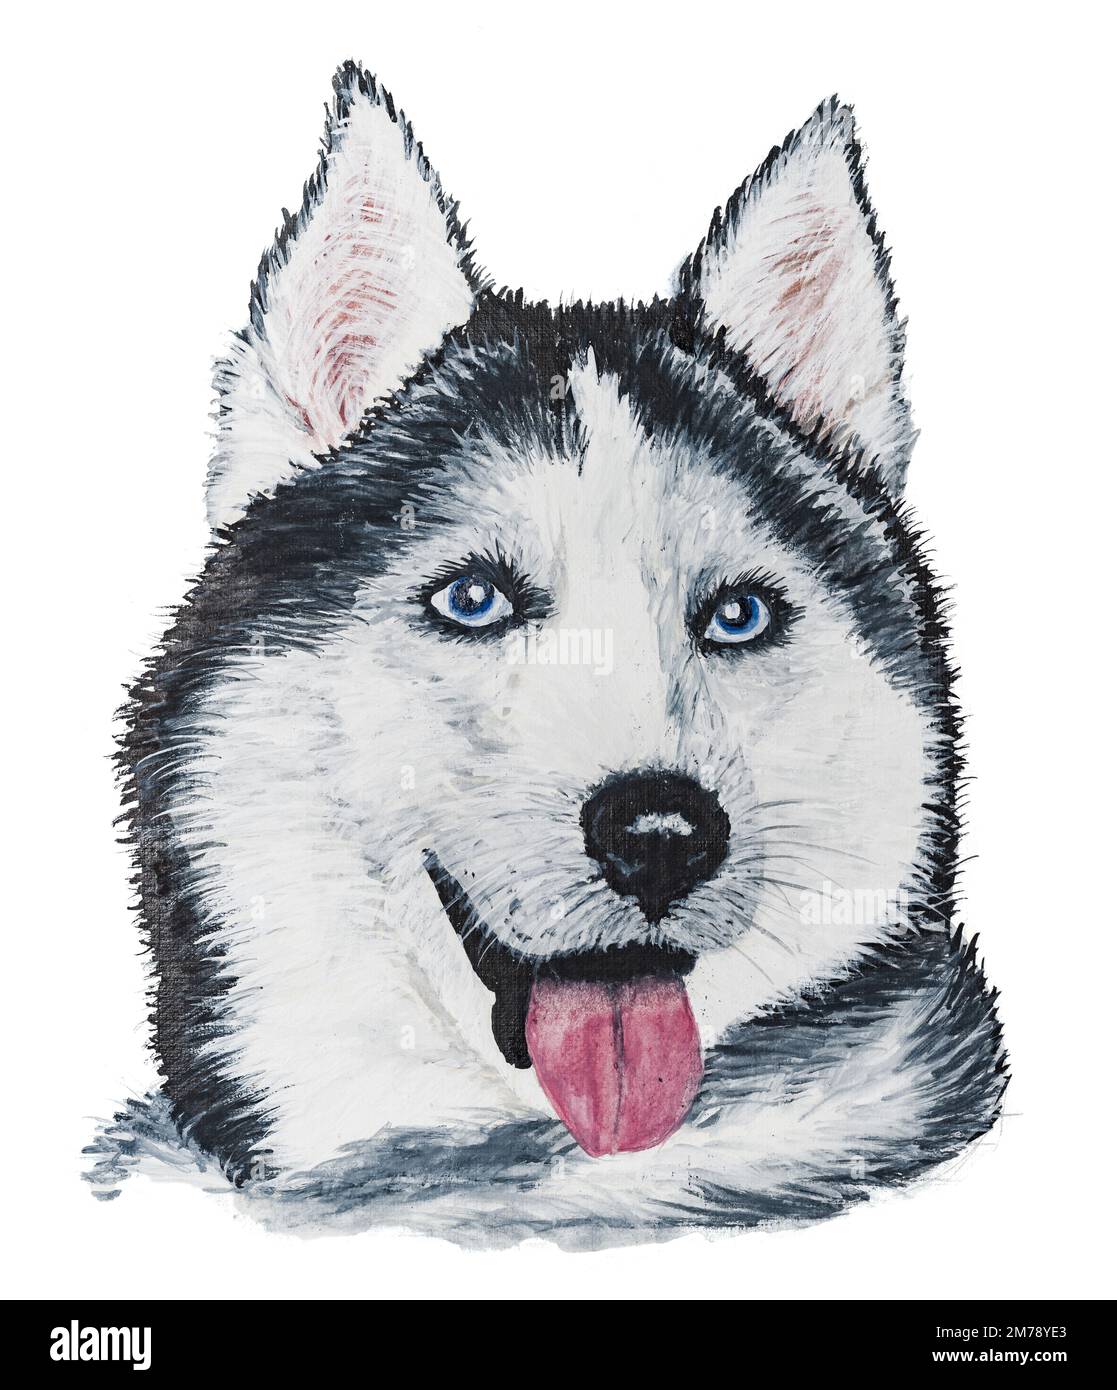 Husky dog portrait, watercolor painting Stock Photo